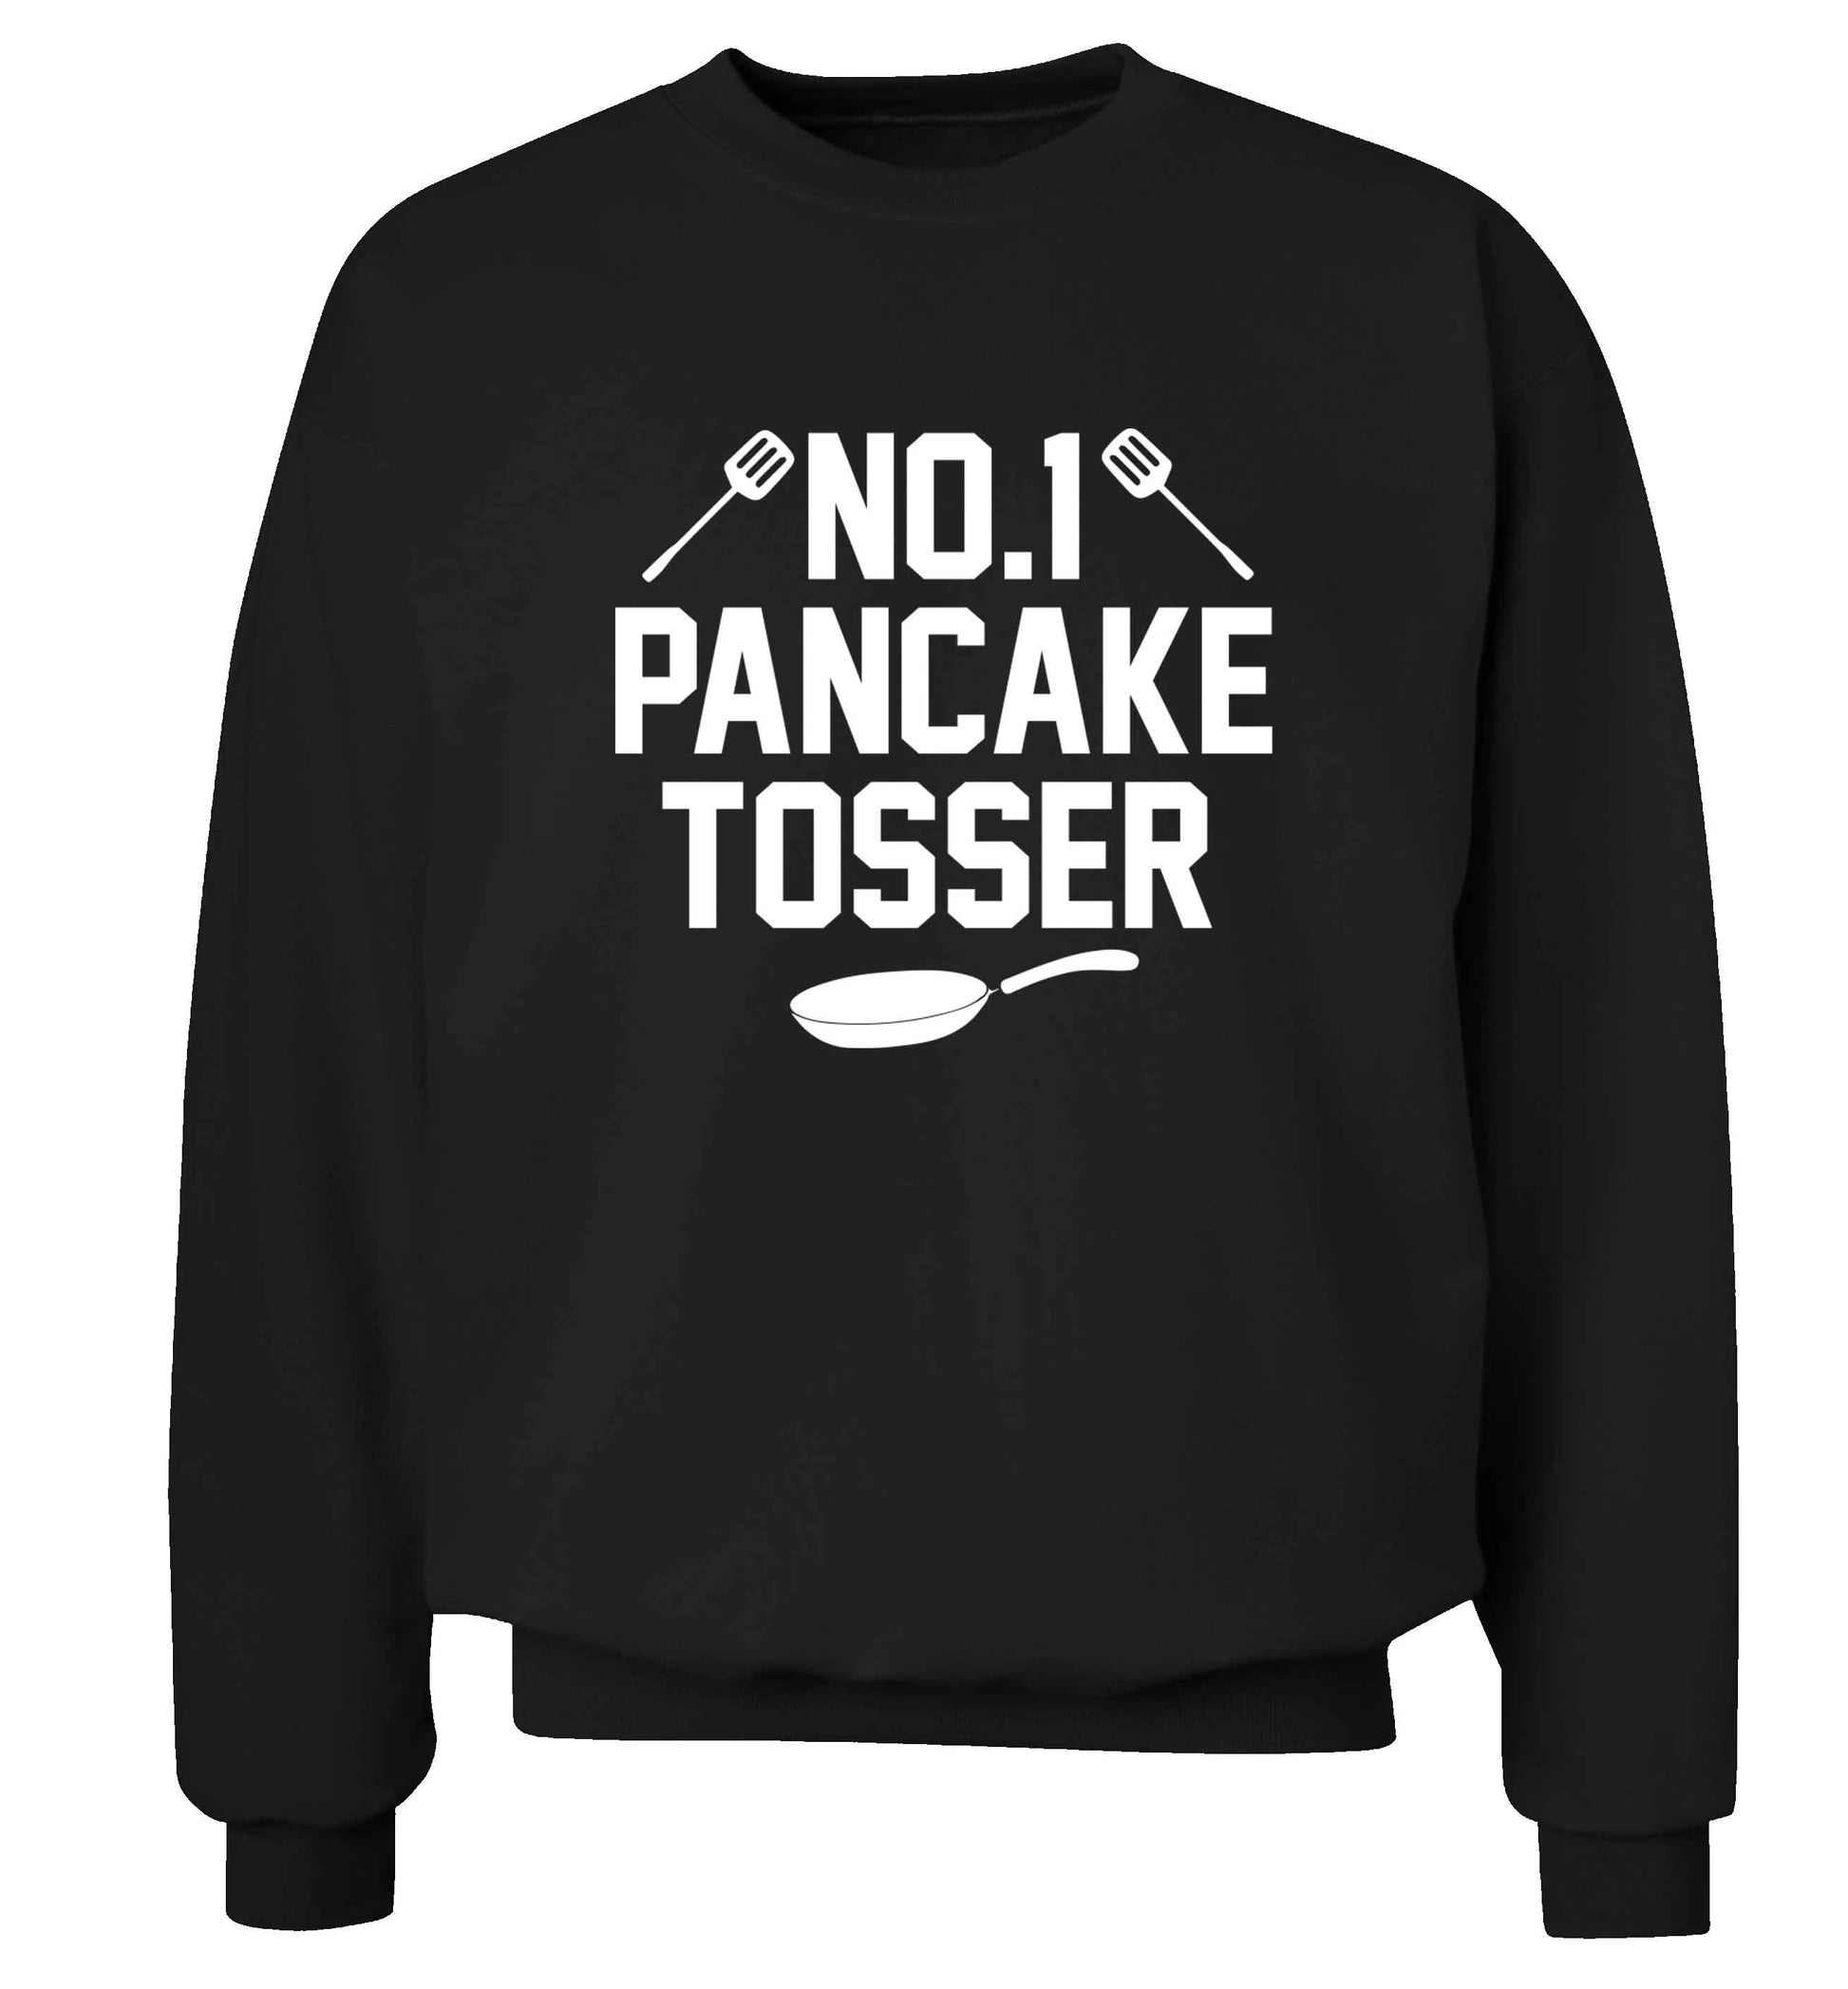 No.1 Pancake tosser adult's unisex black sweater 2XL